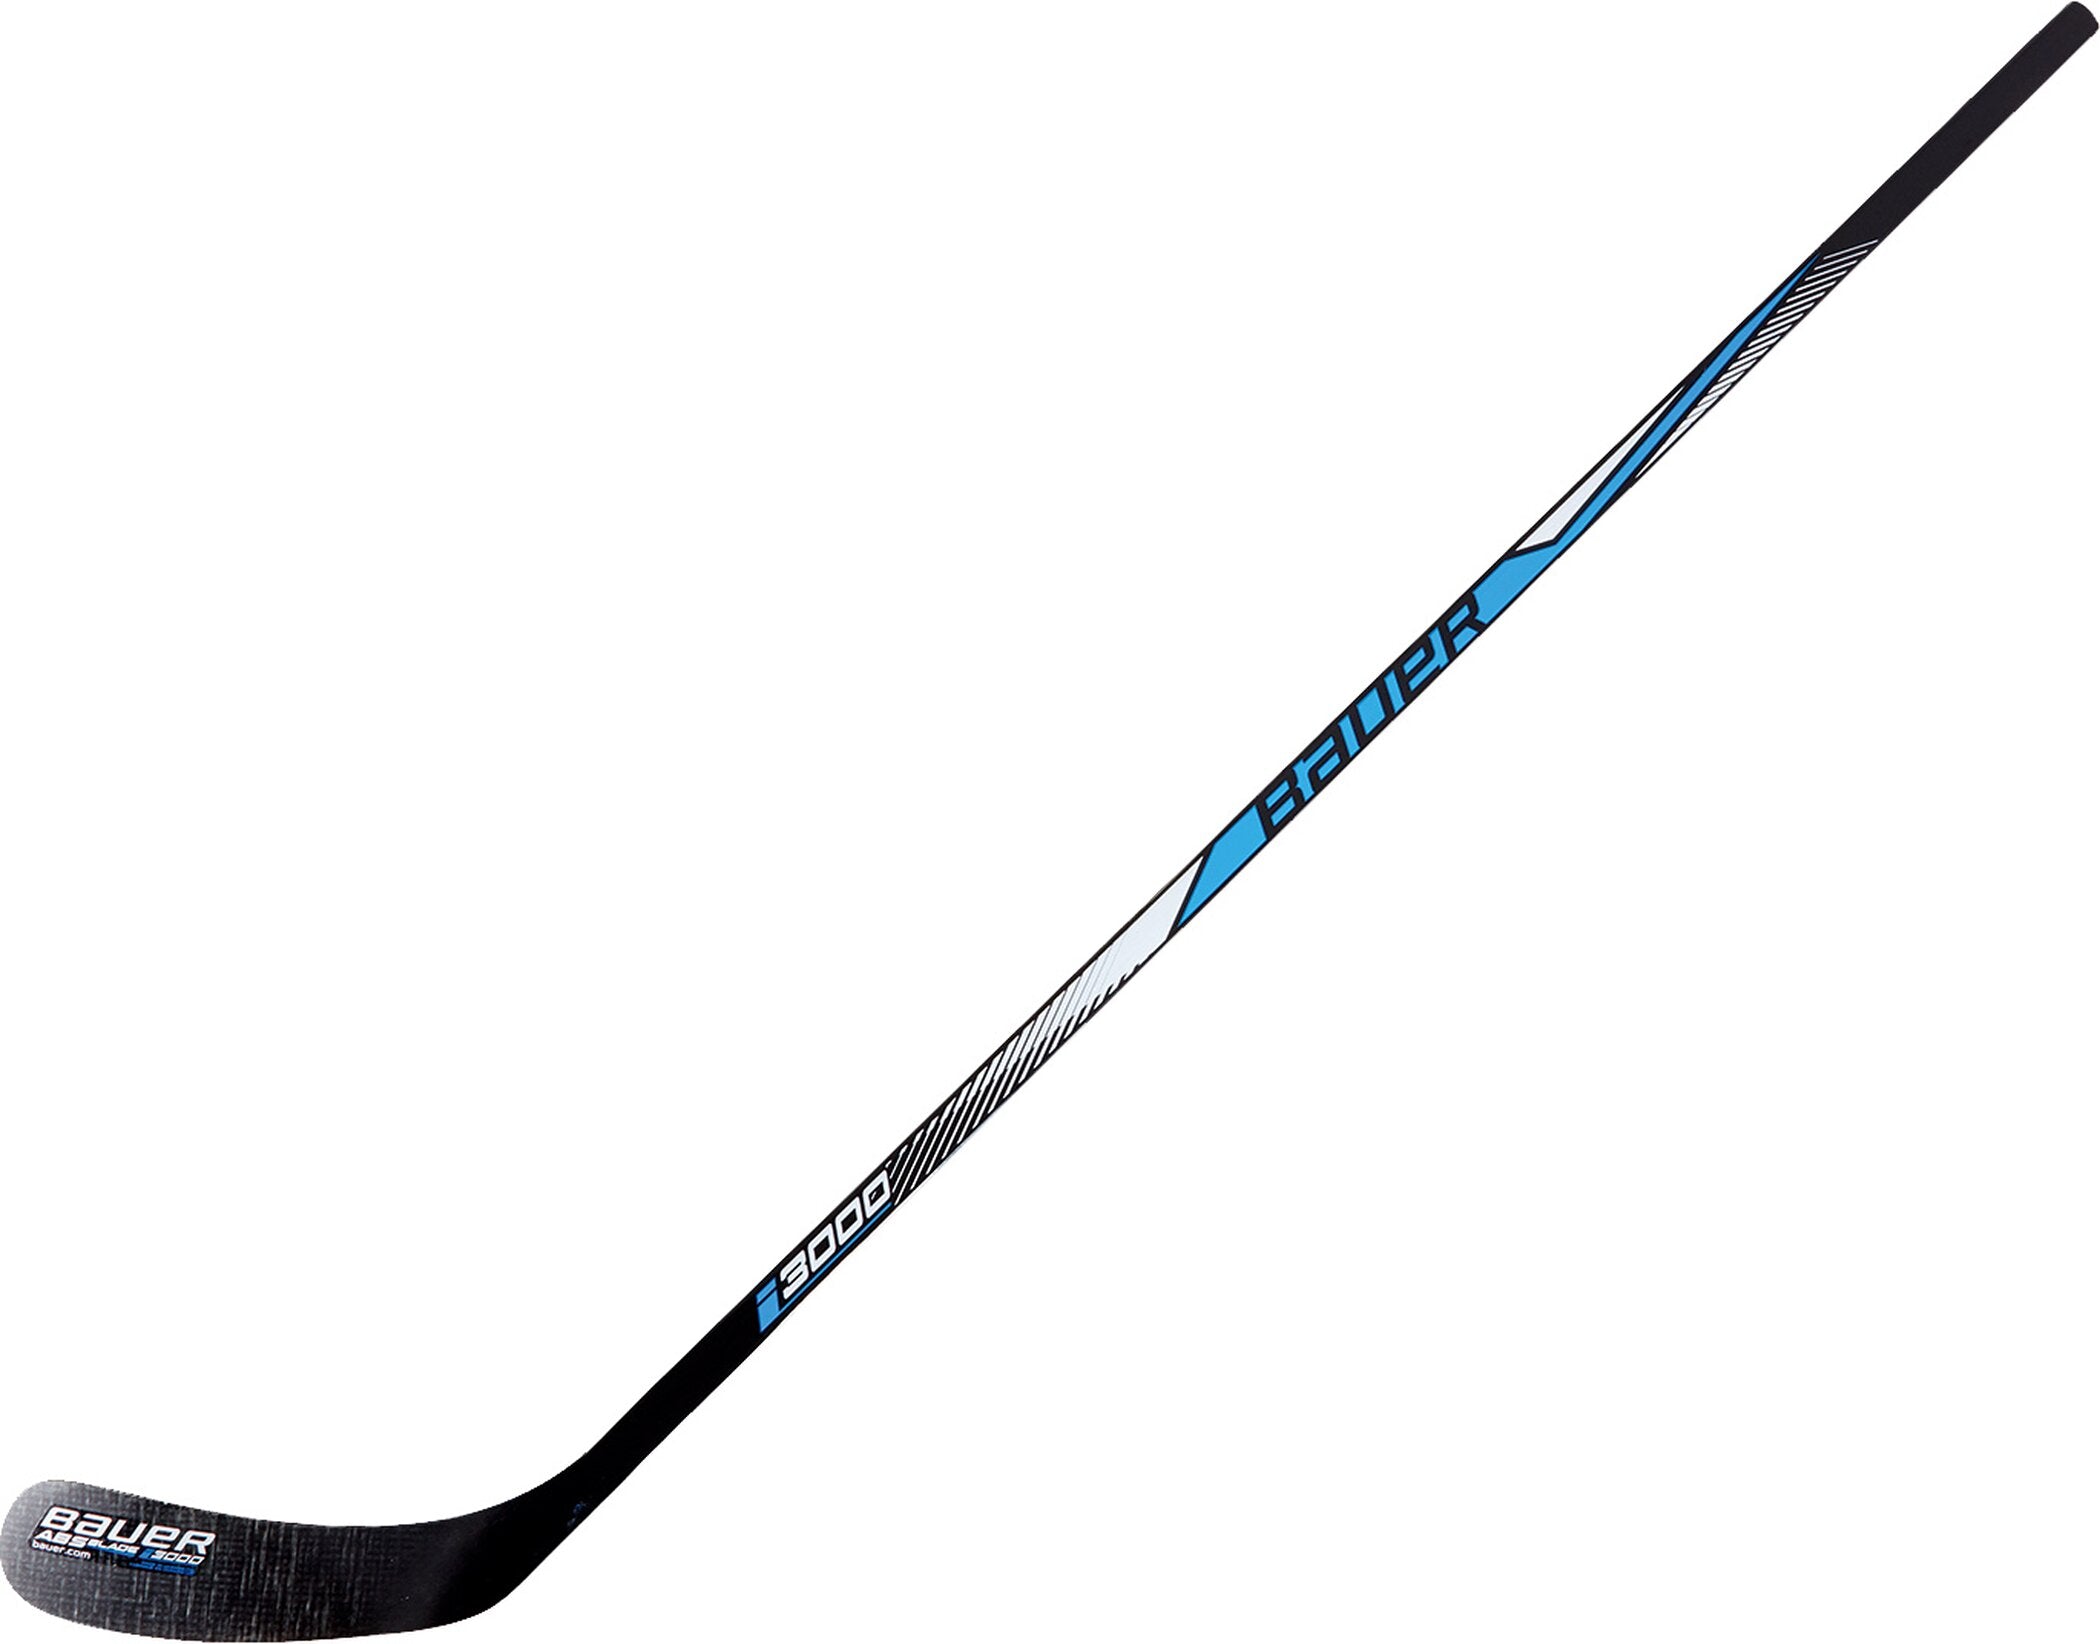 Streethockey-Stock I3000 ABS BLATT - 59 SR